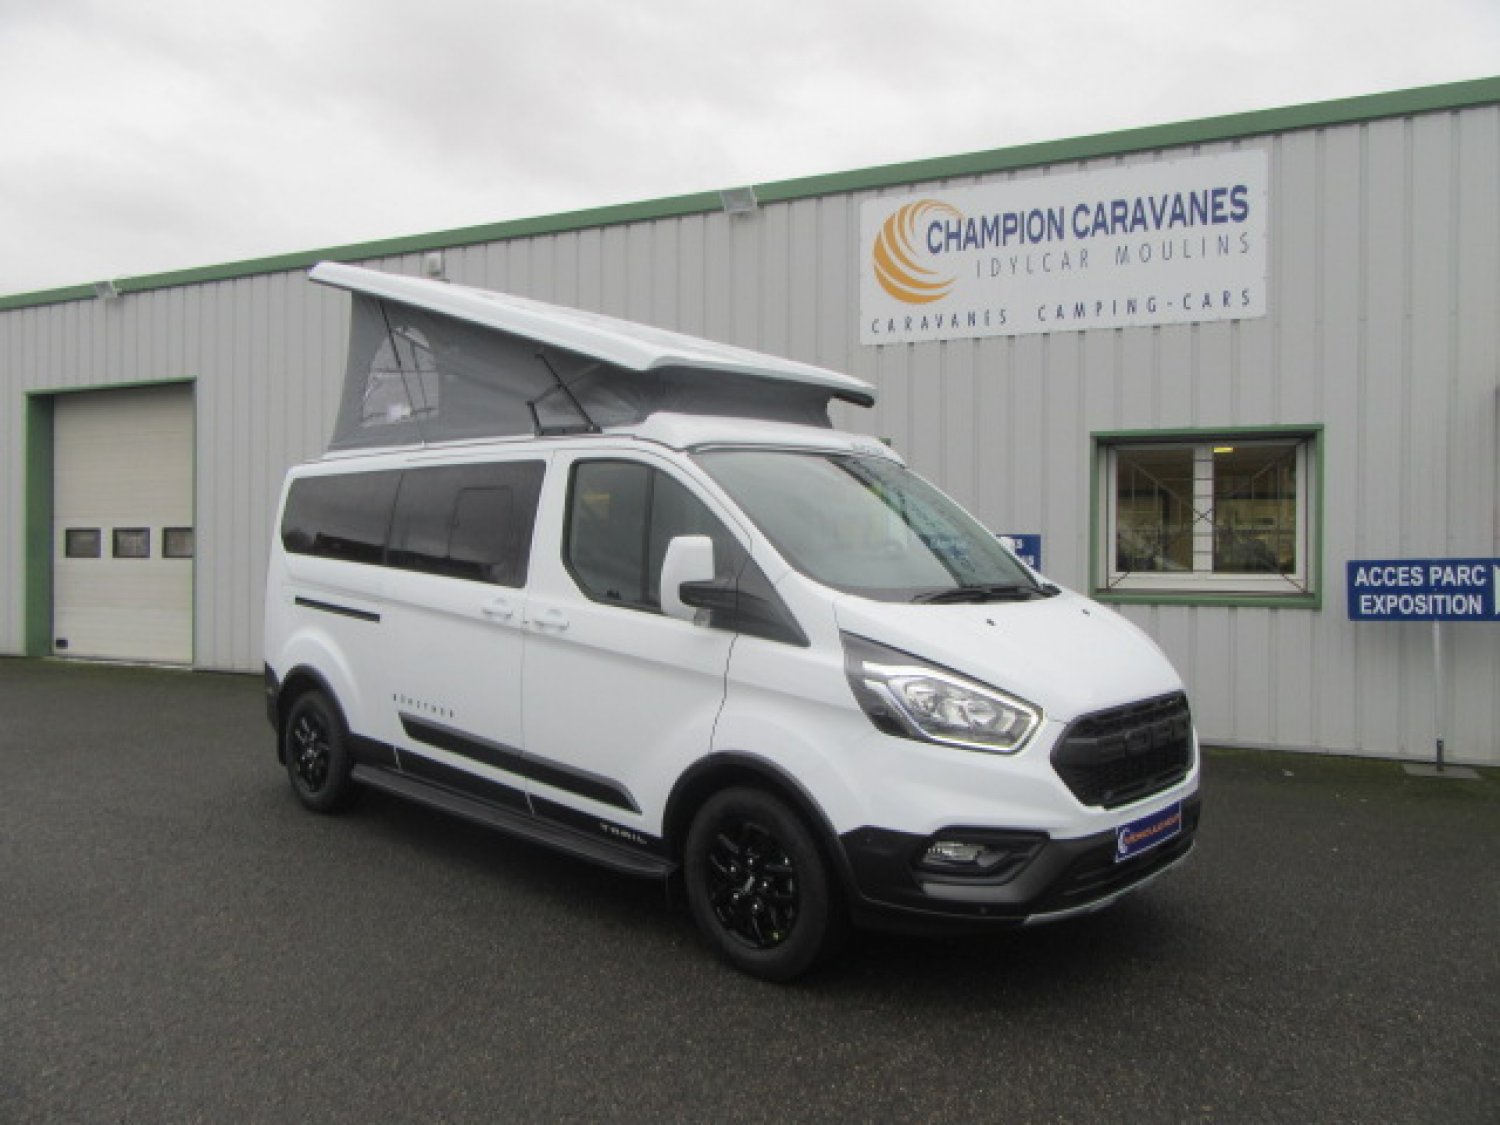 Antoine Caravanes et Camping Car - Burstner COPA C 530 TRAIL à 69 170 €